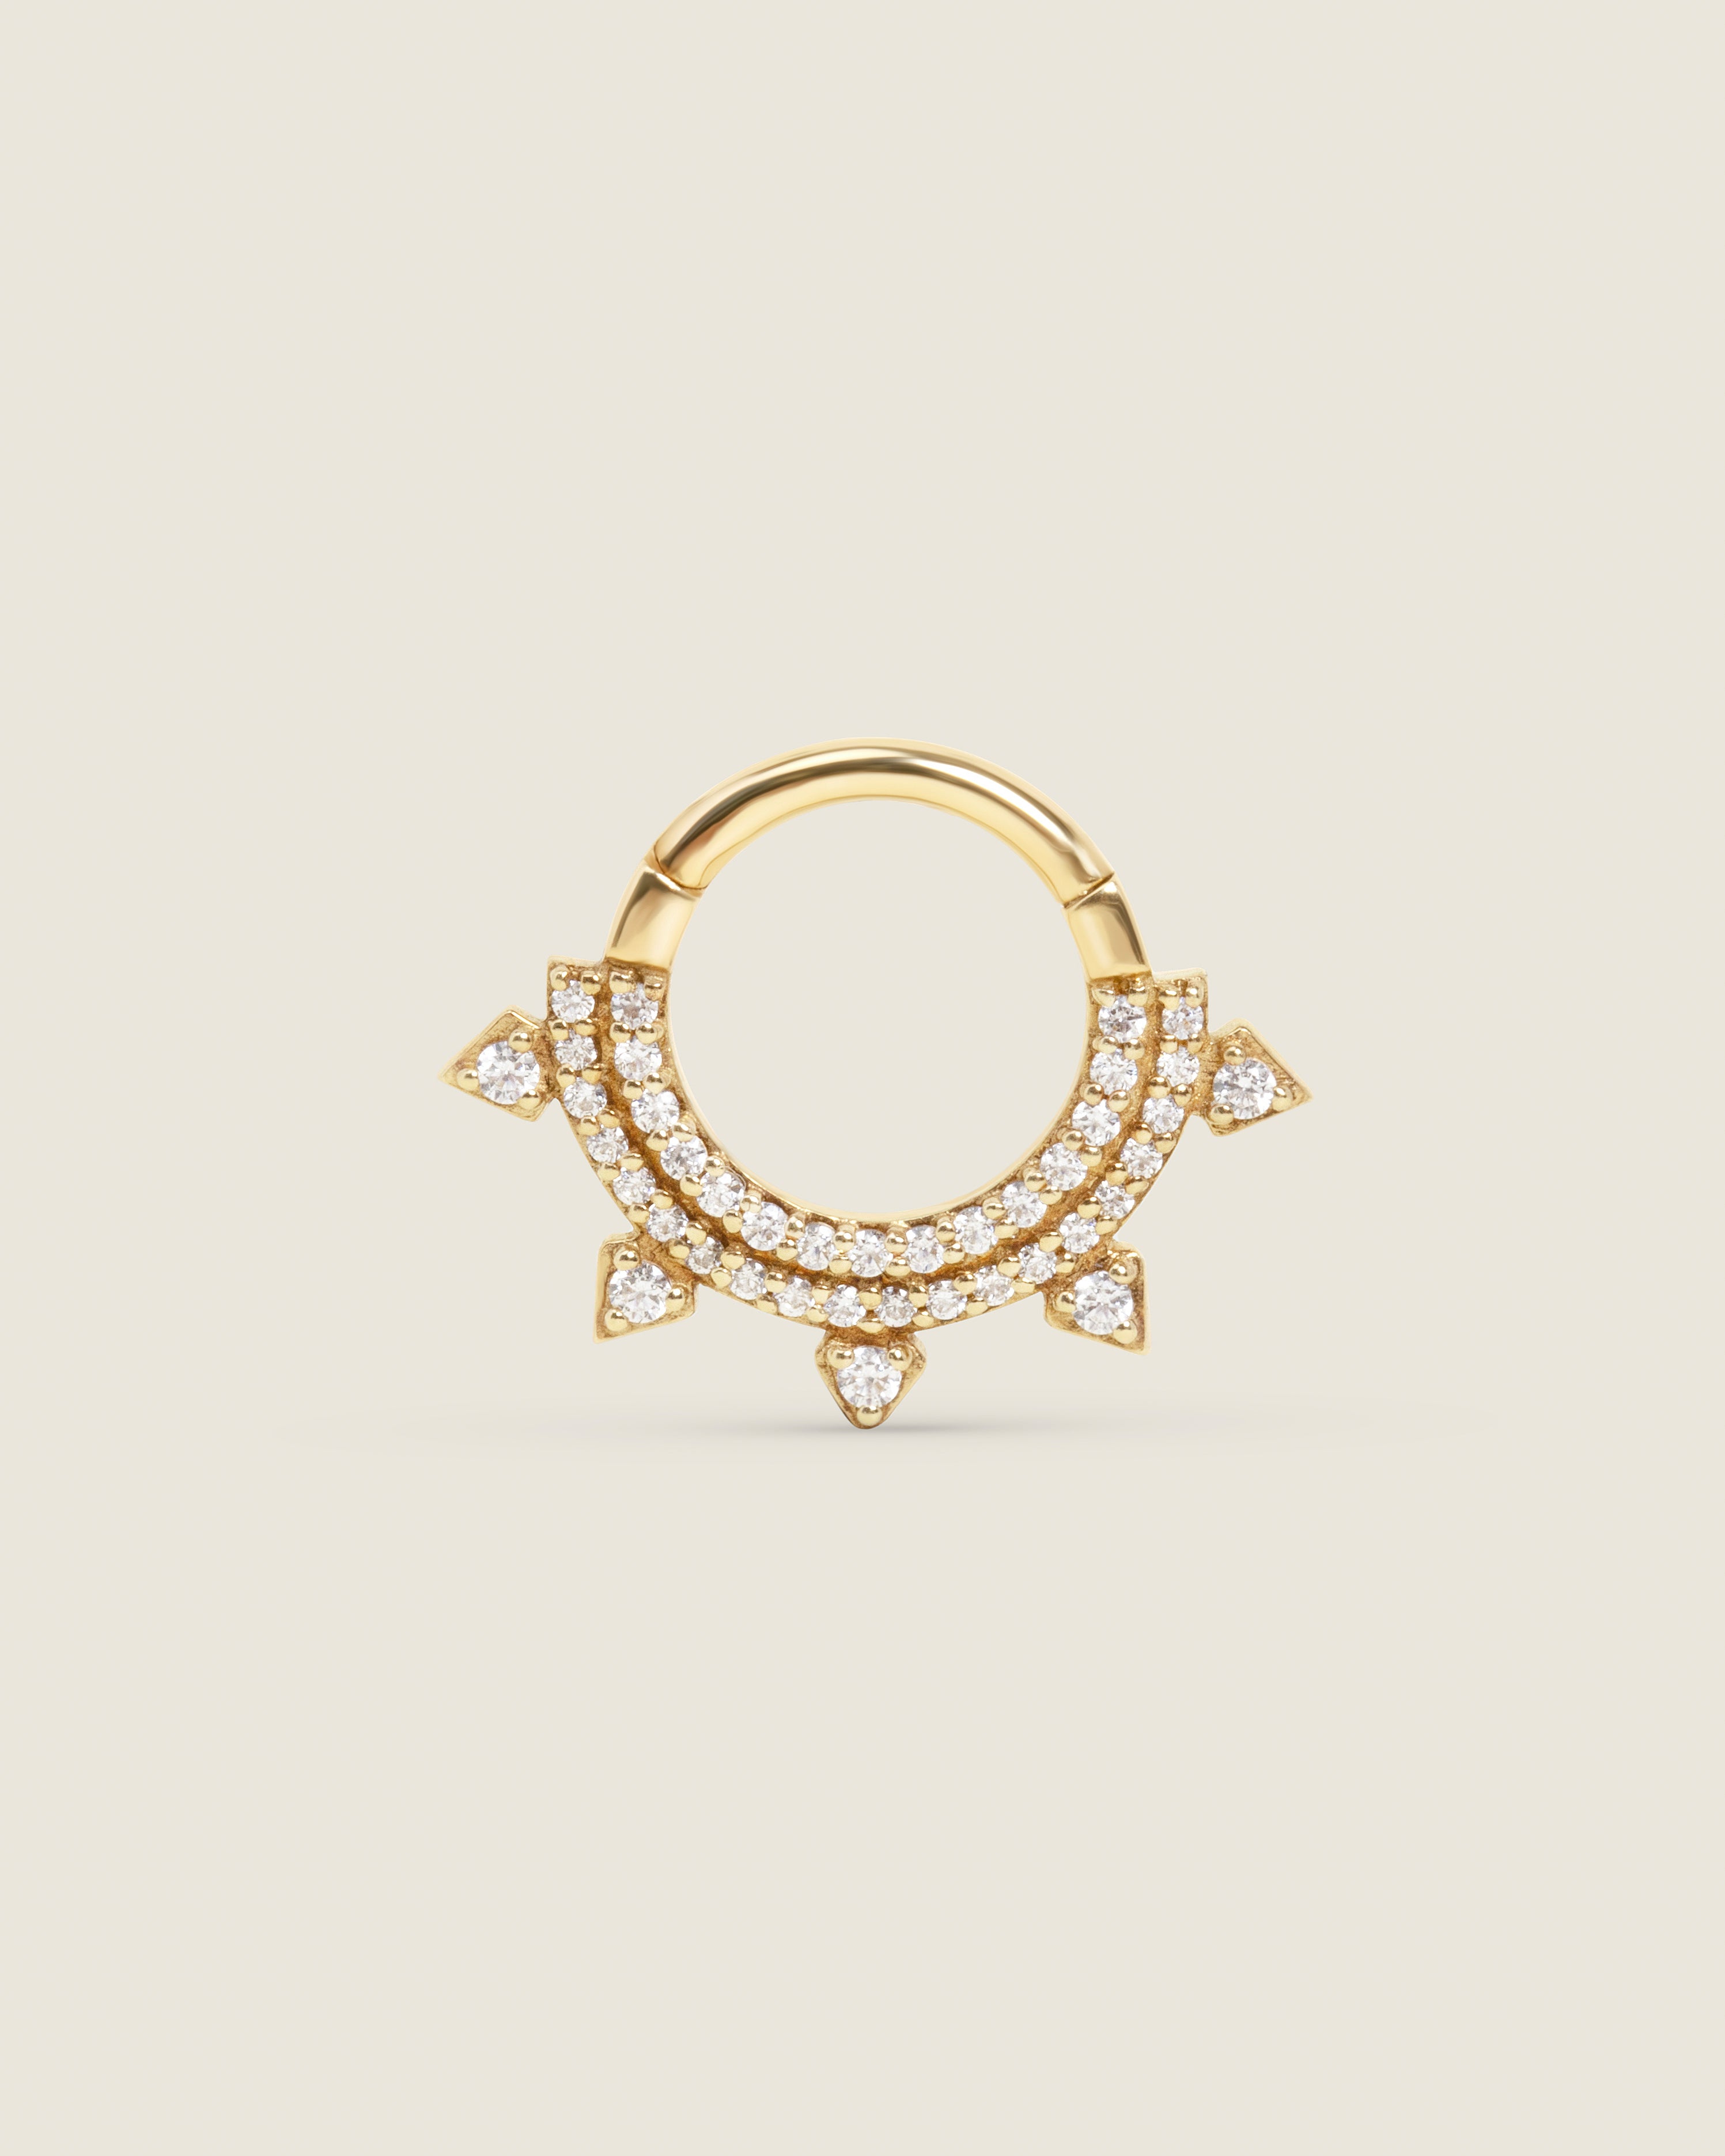 Septum Piercing Jewelry | Assolari